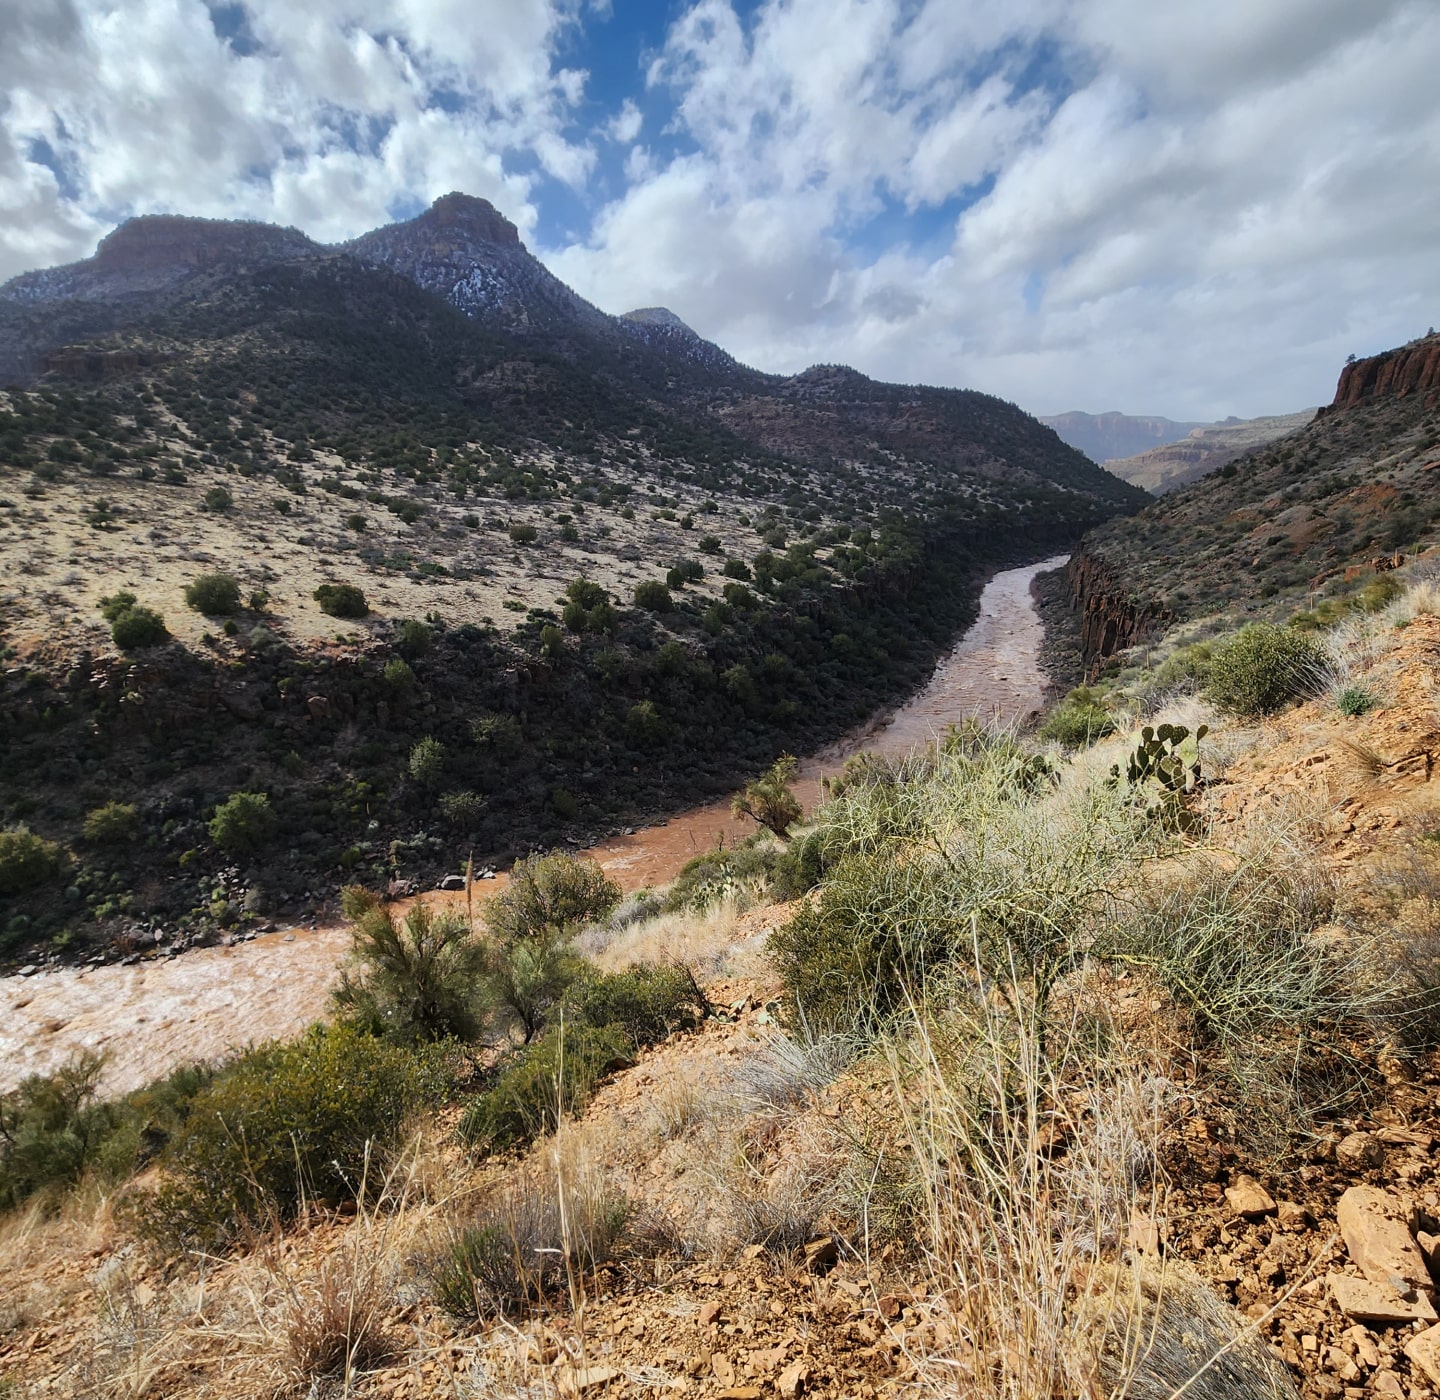 A muddy river flows through the desert